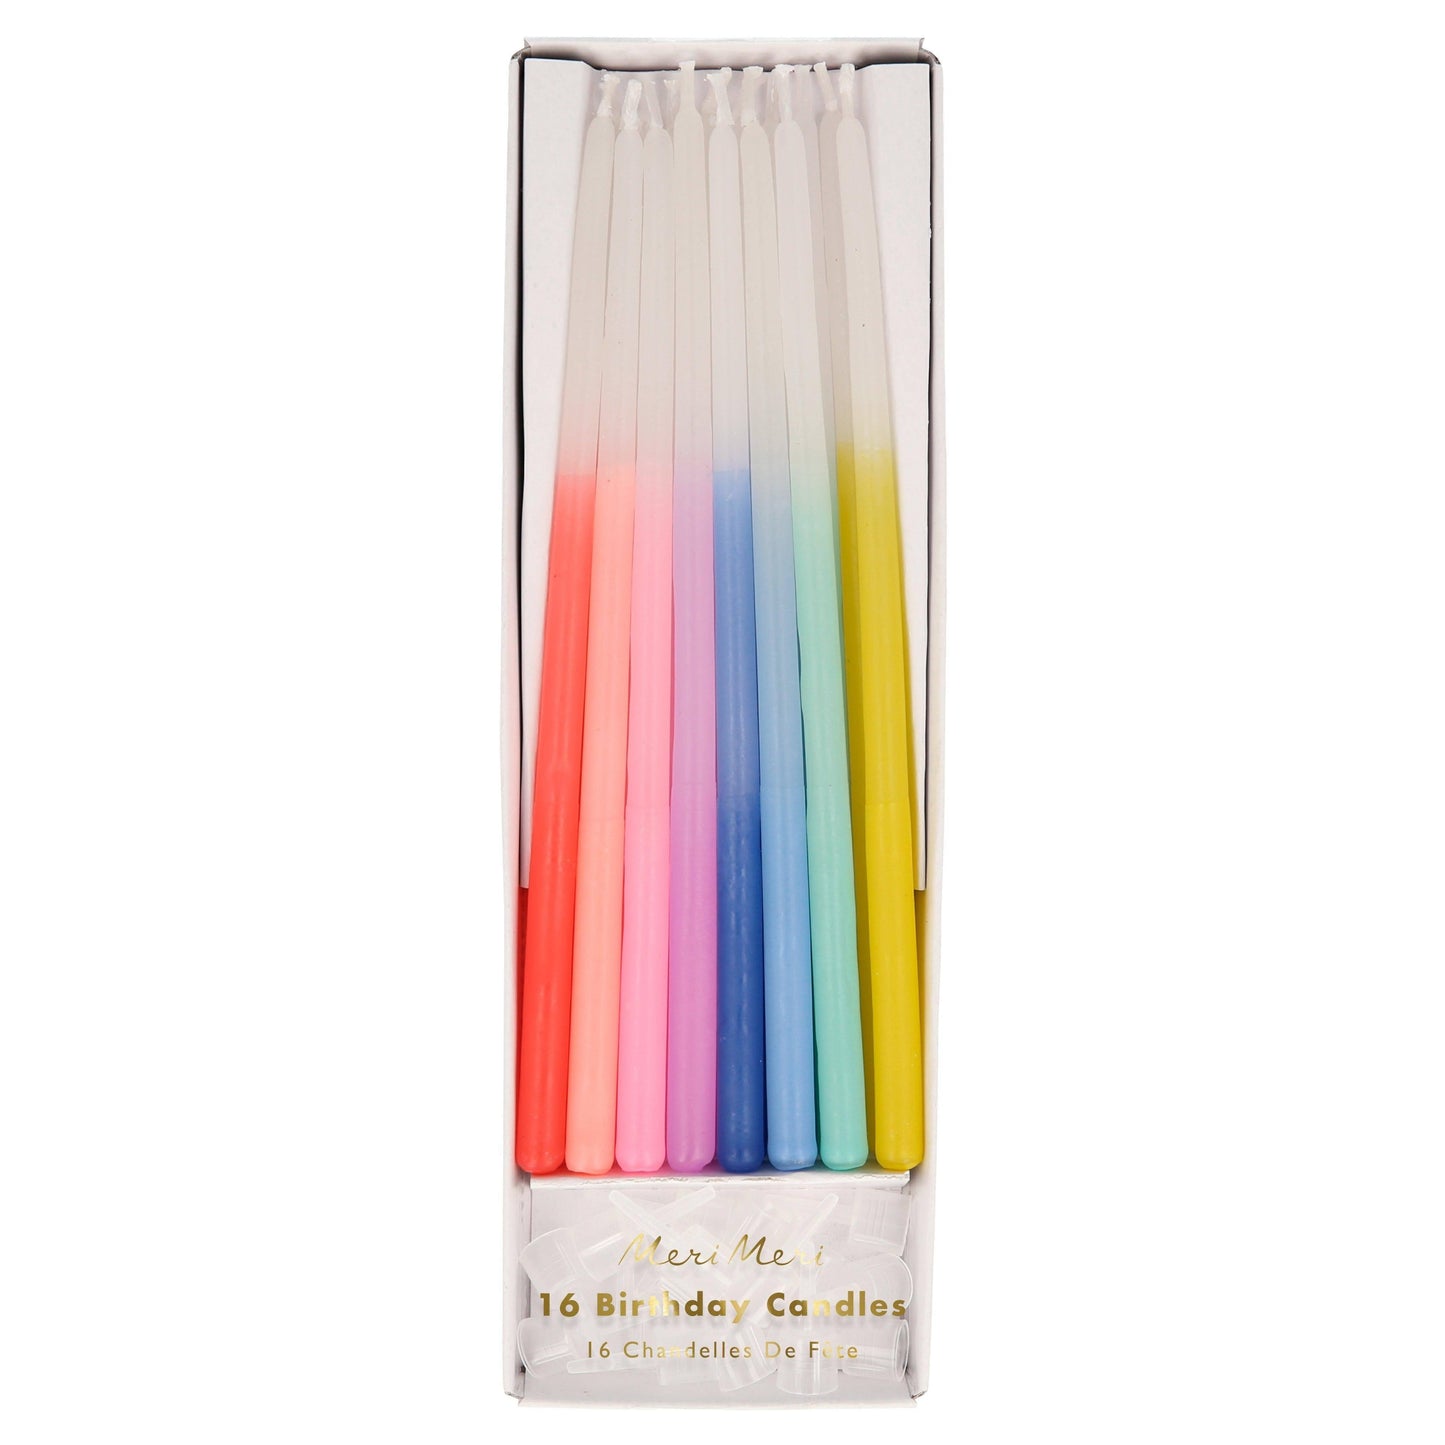 Meri Meri Rainbow Dipped Tapered Candles (x 16) - partyalacarte.co.in